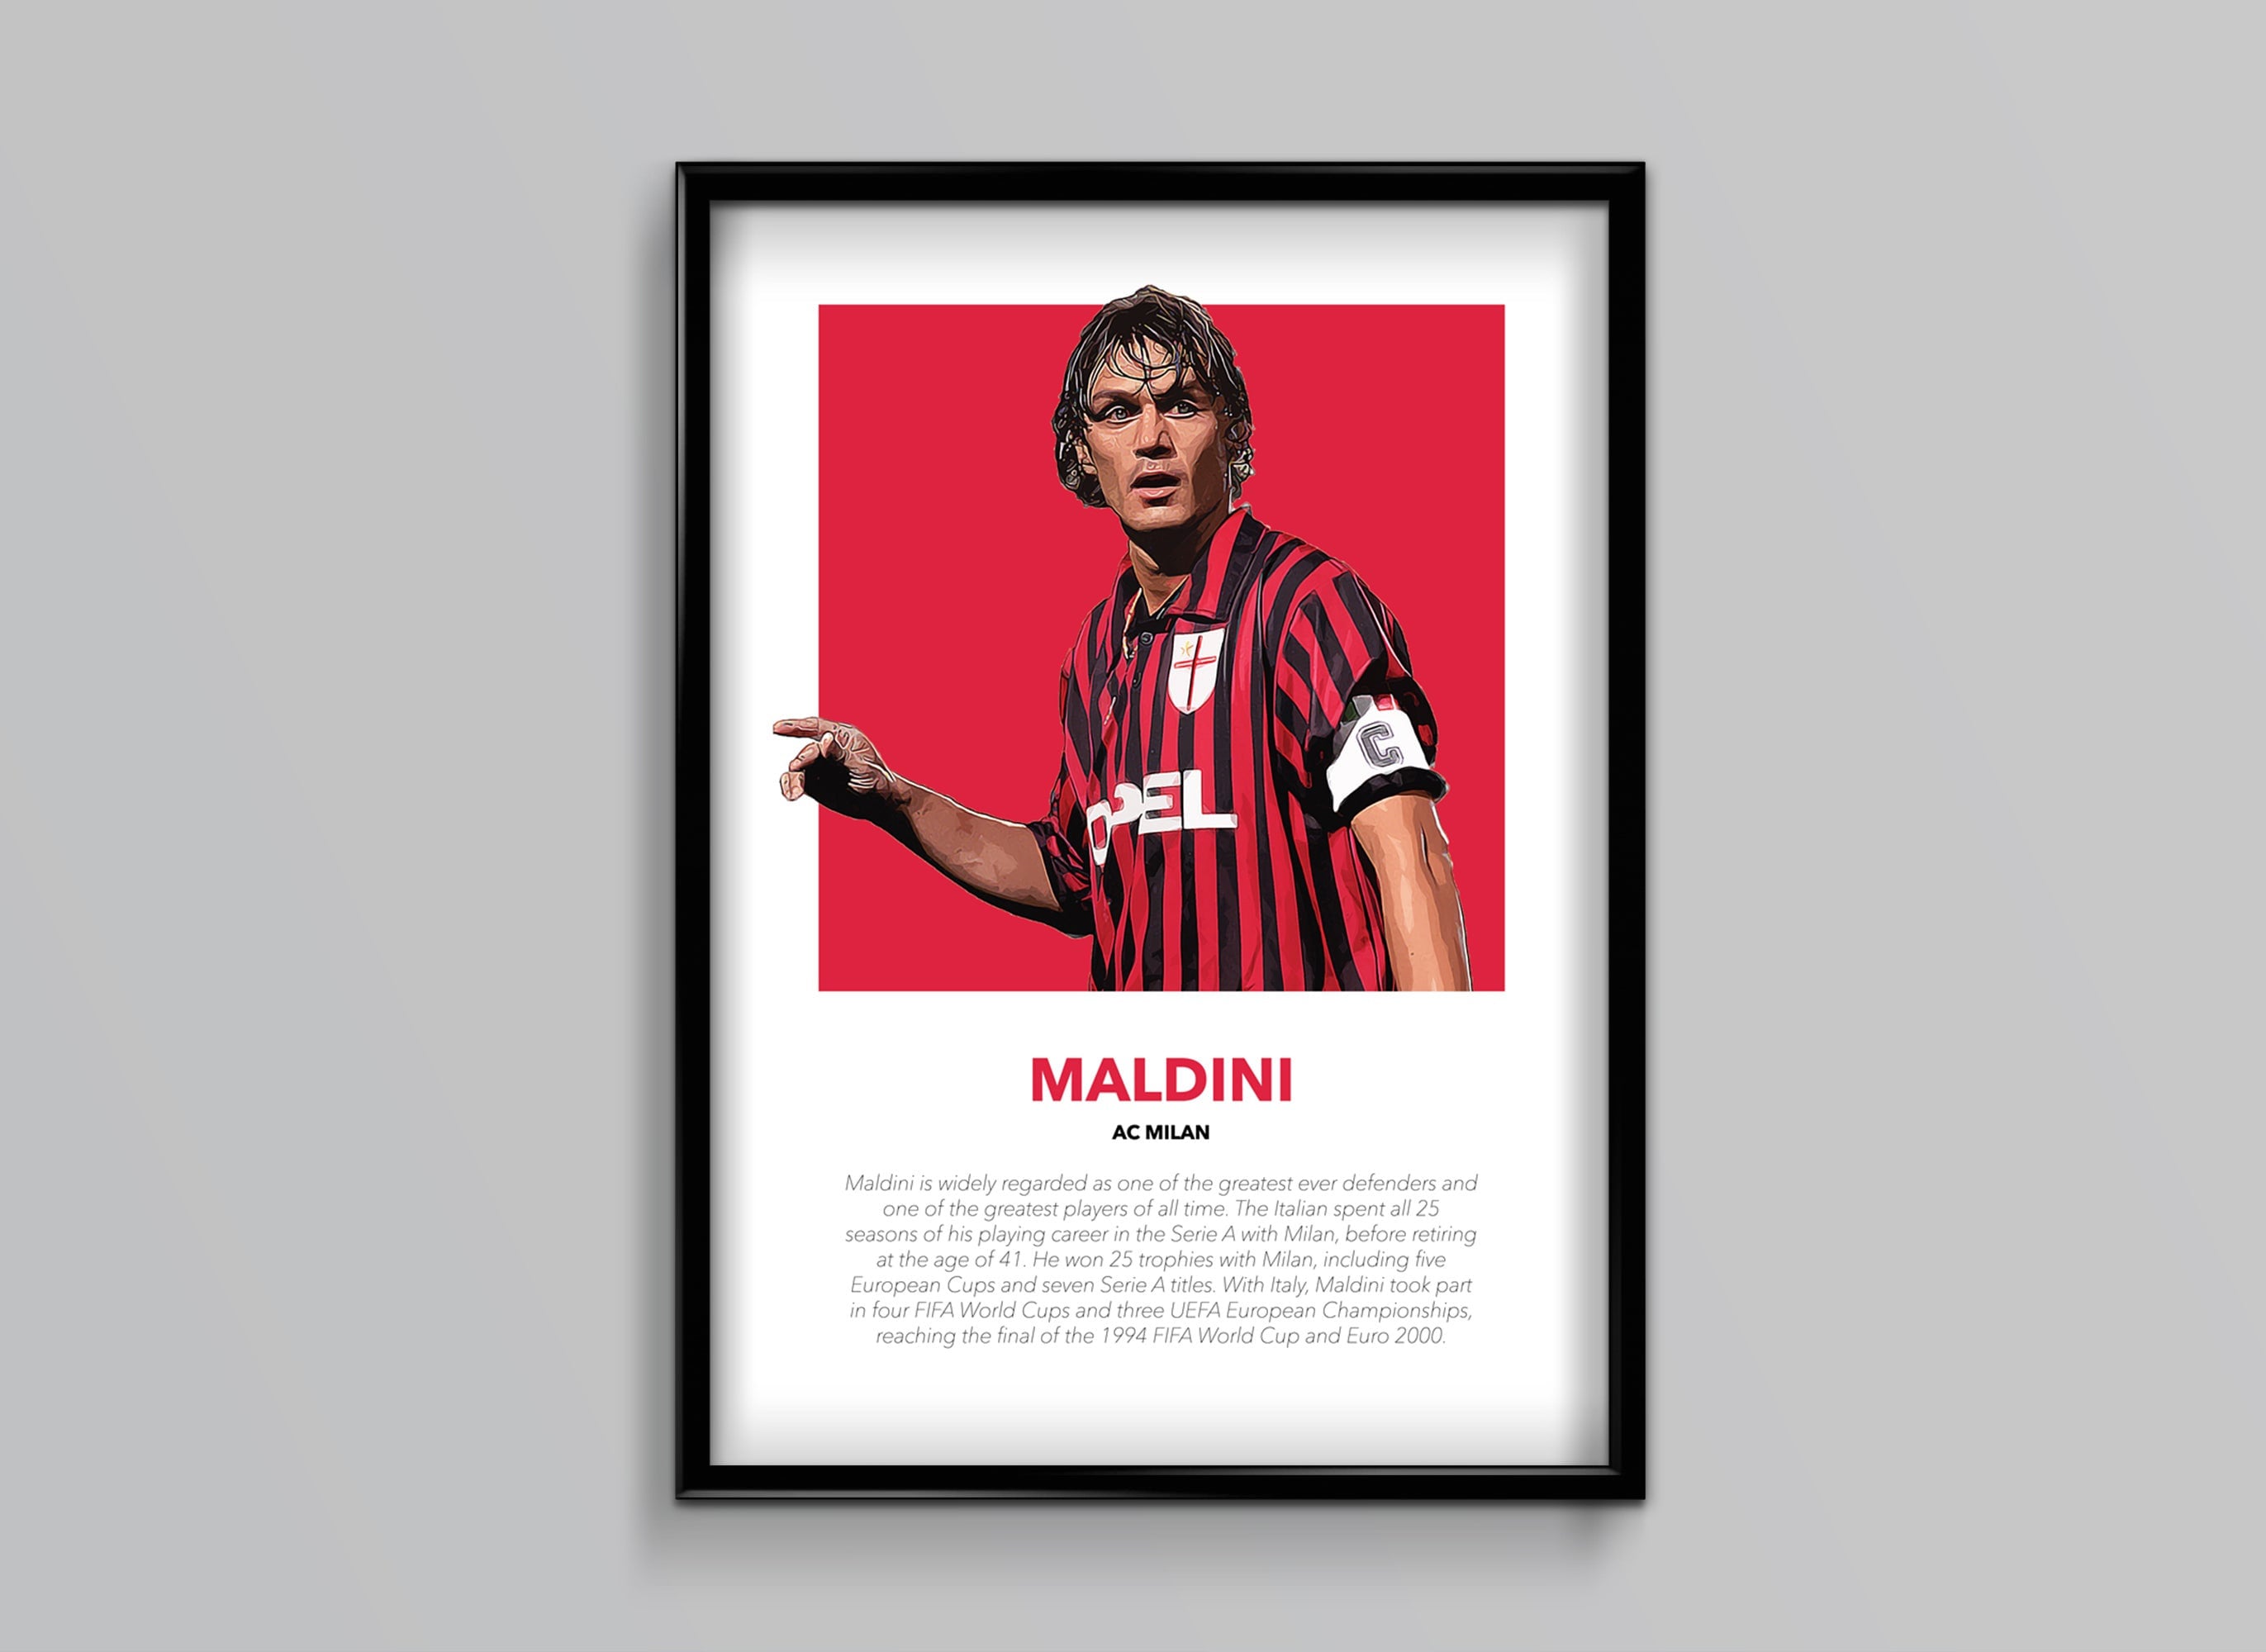 AC MILAN Paolo Maldini 3 SOLO PER TE Official Stilscreen Football Soccer  Badge Patch